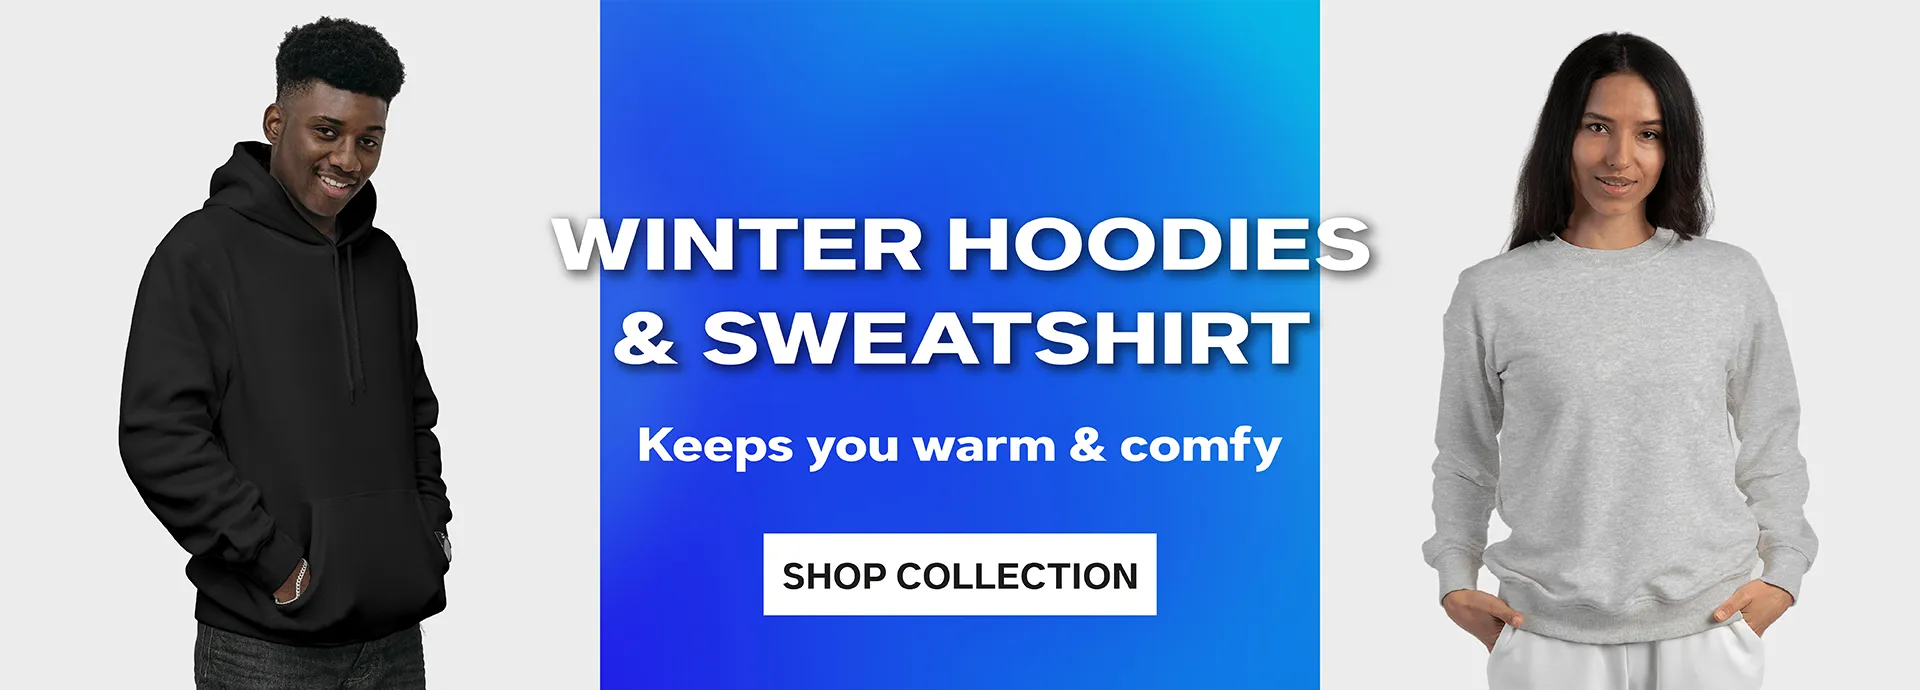 winter hoodies for men and sweatshirt for women in india winter wear combo offer online at best price